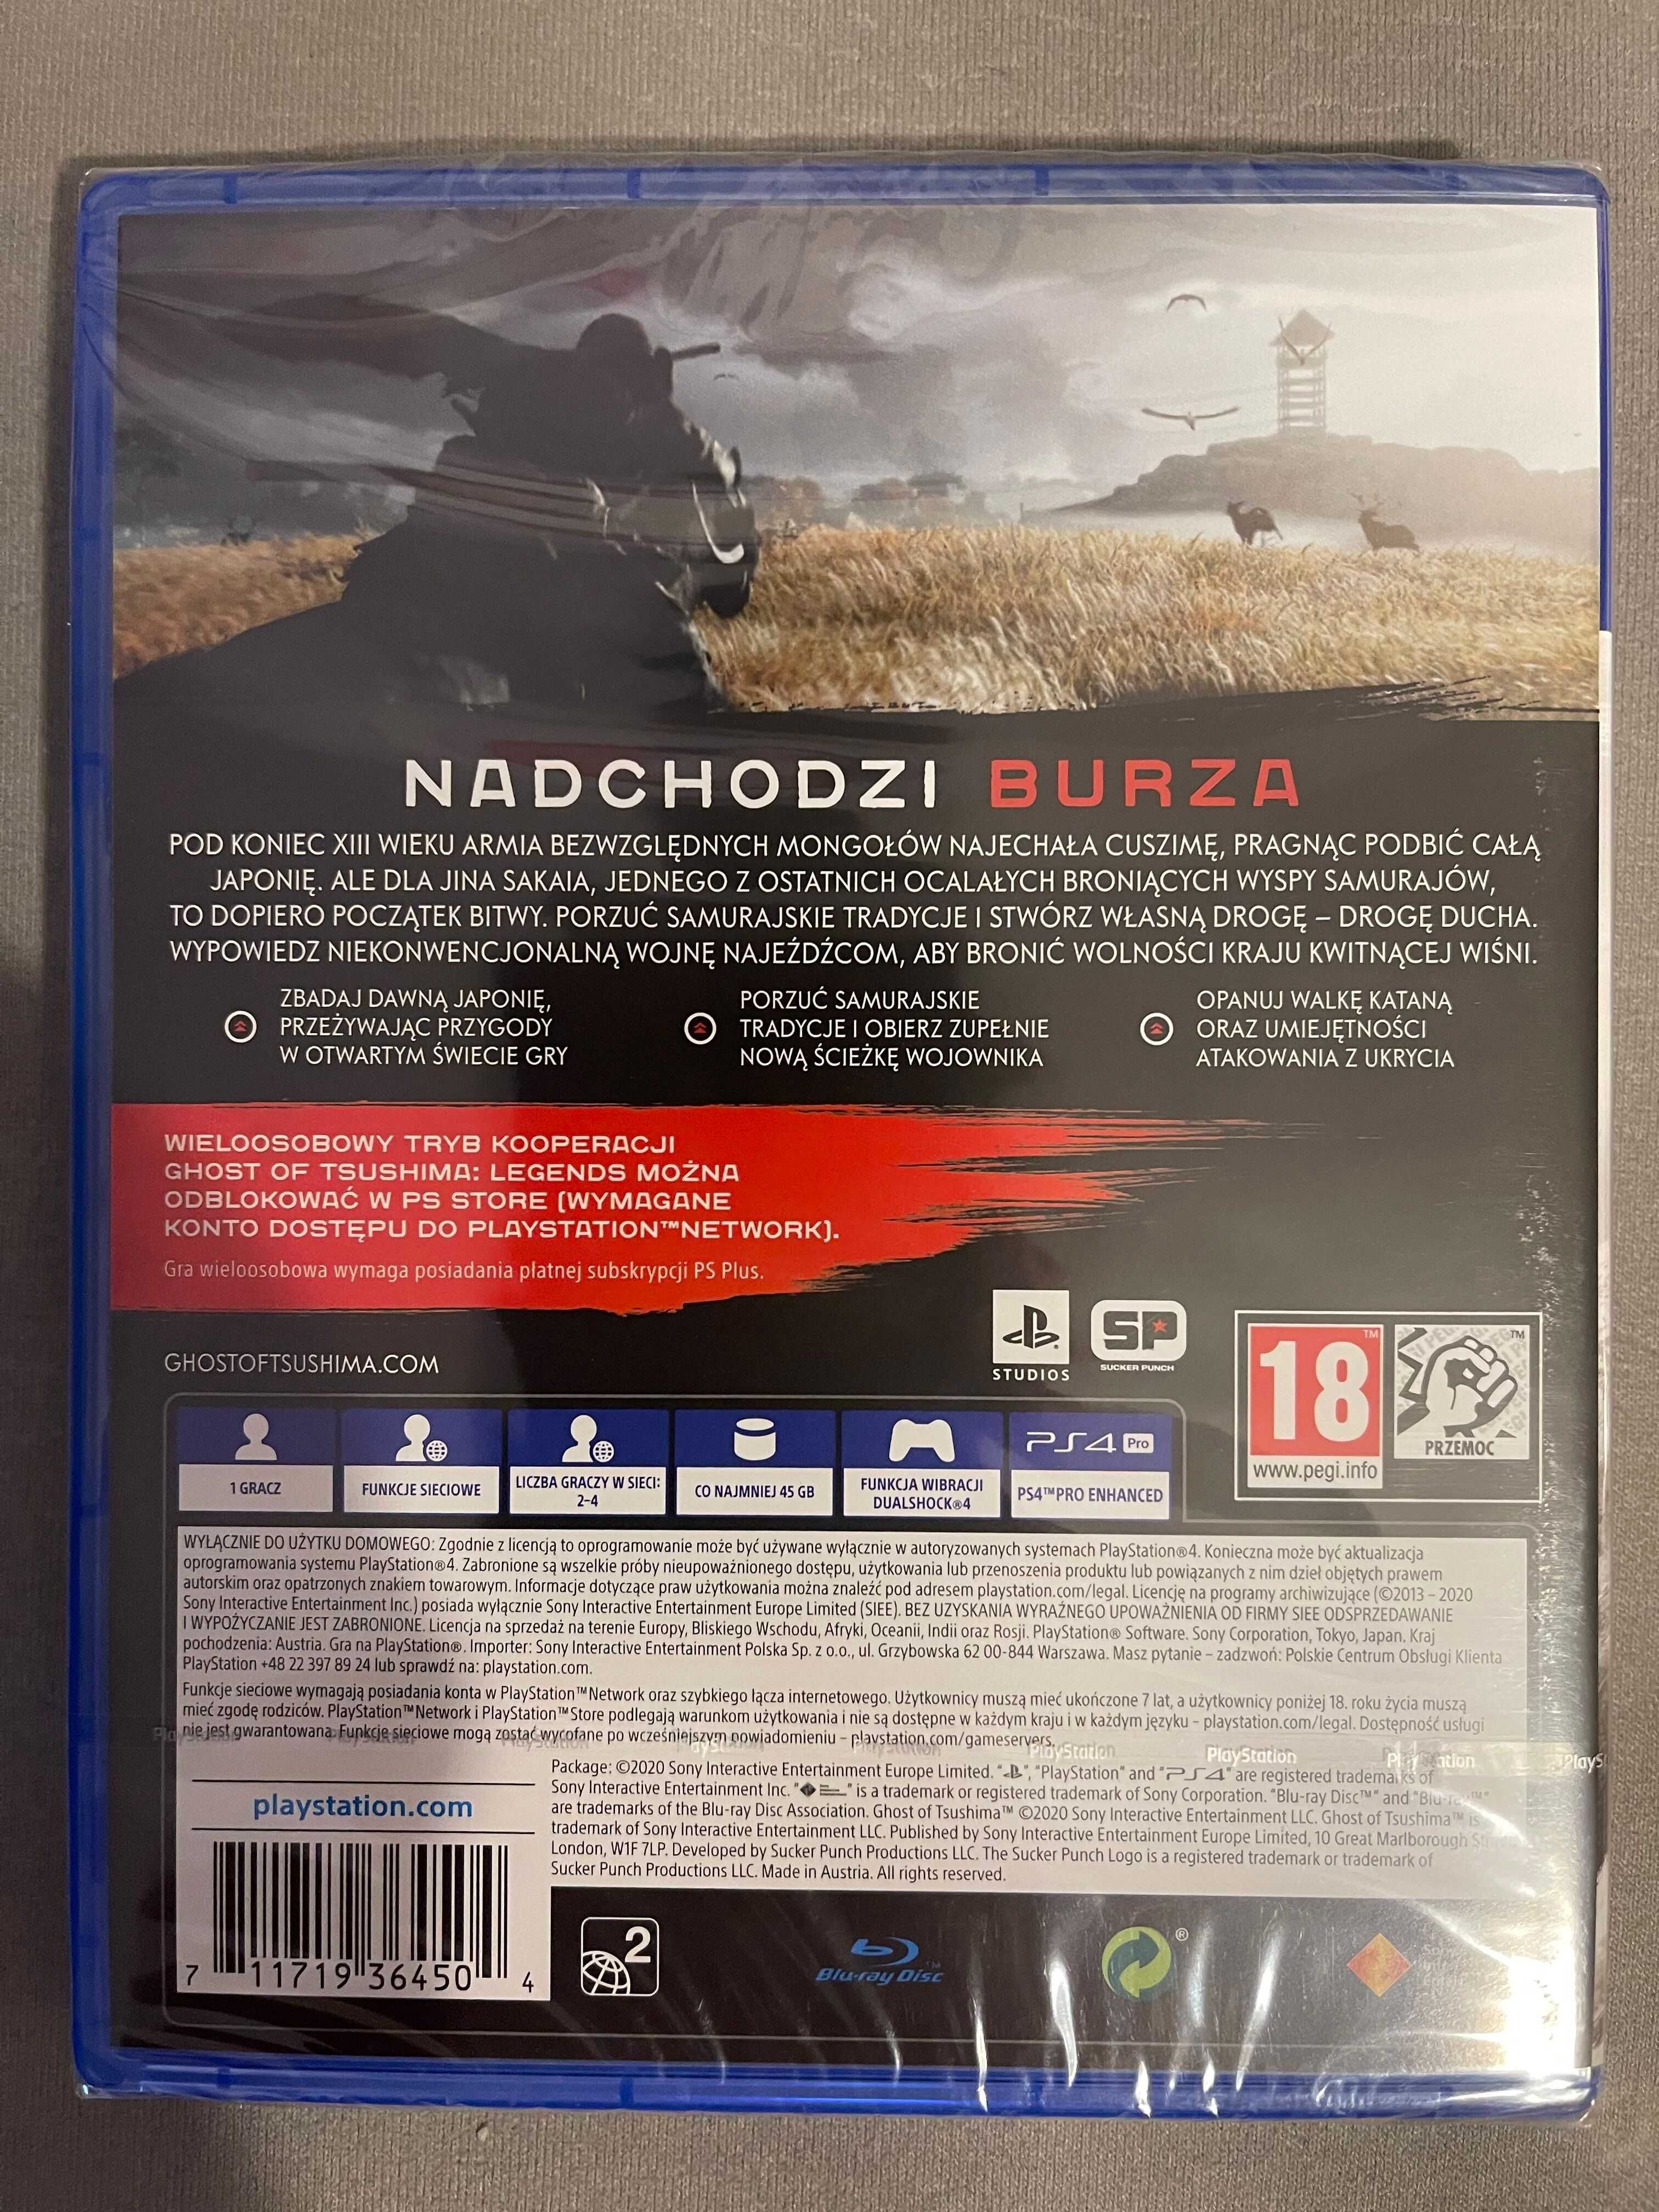 Ghost of Tsushima / Gra PlayStation 4 Nowa w folii polska dystrybucja